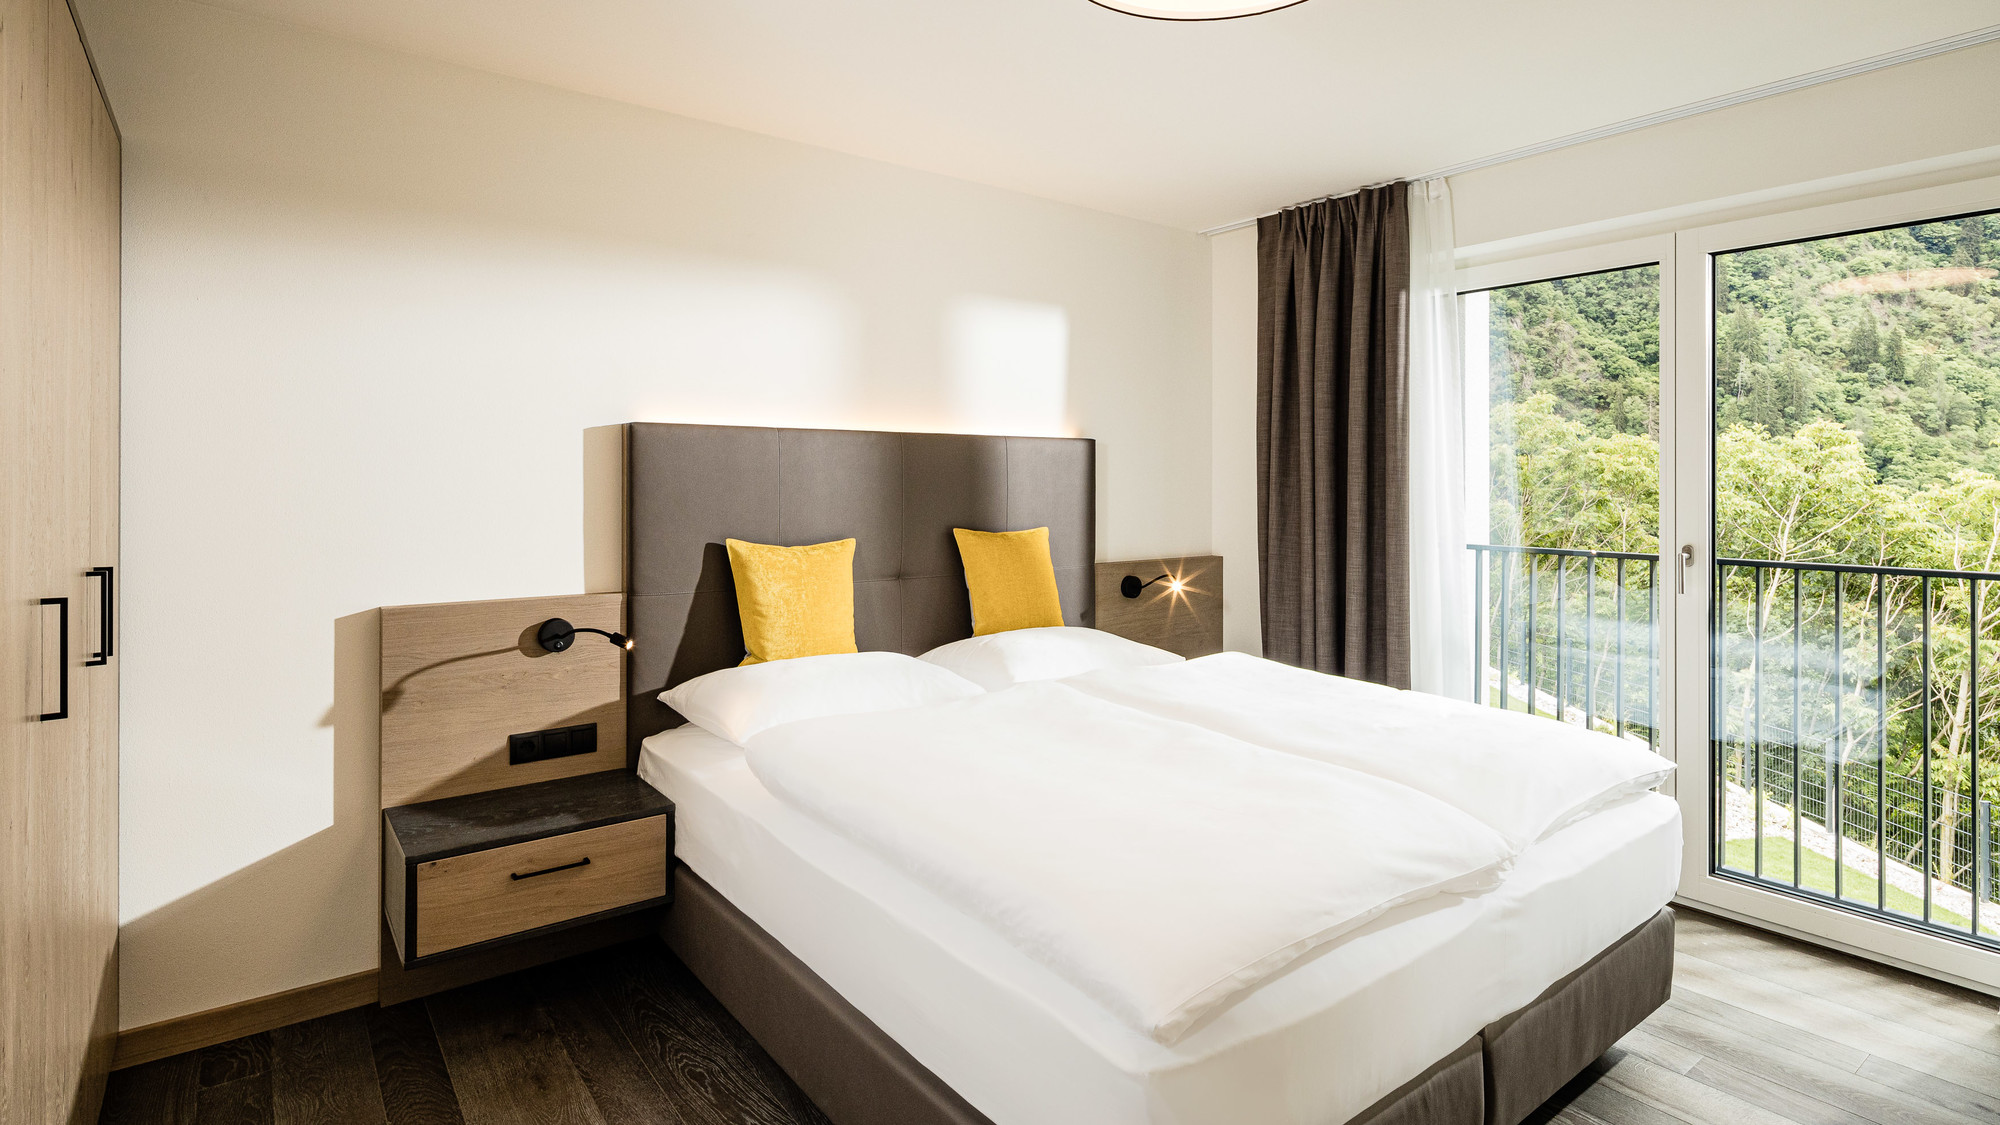 New Type 16 Three Bedroom Panorama Suite With Patio And Jacuzzi Apartment Suites Panorama Residence Hotel Saltauserhof Hotel Saltusio Meran Passeier Valley South Tyrol